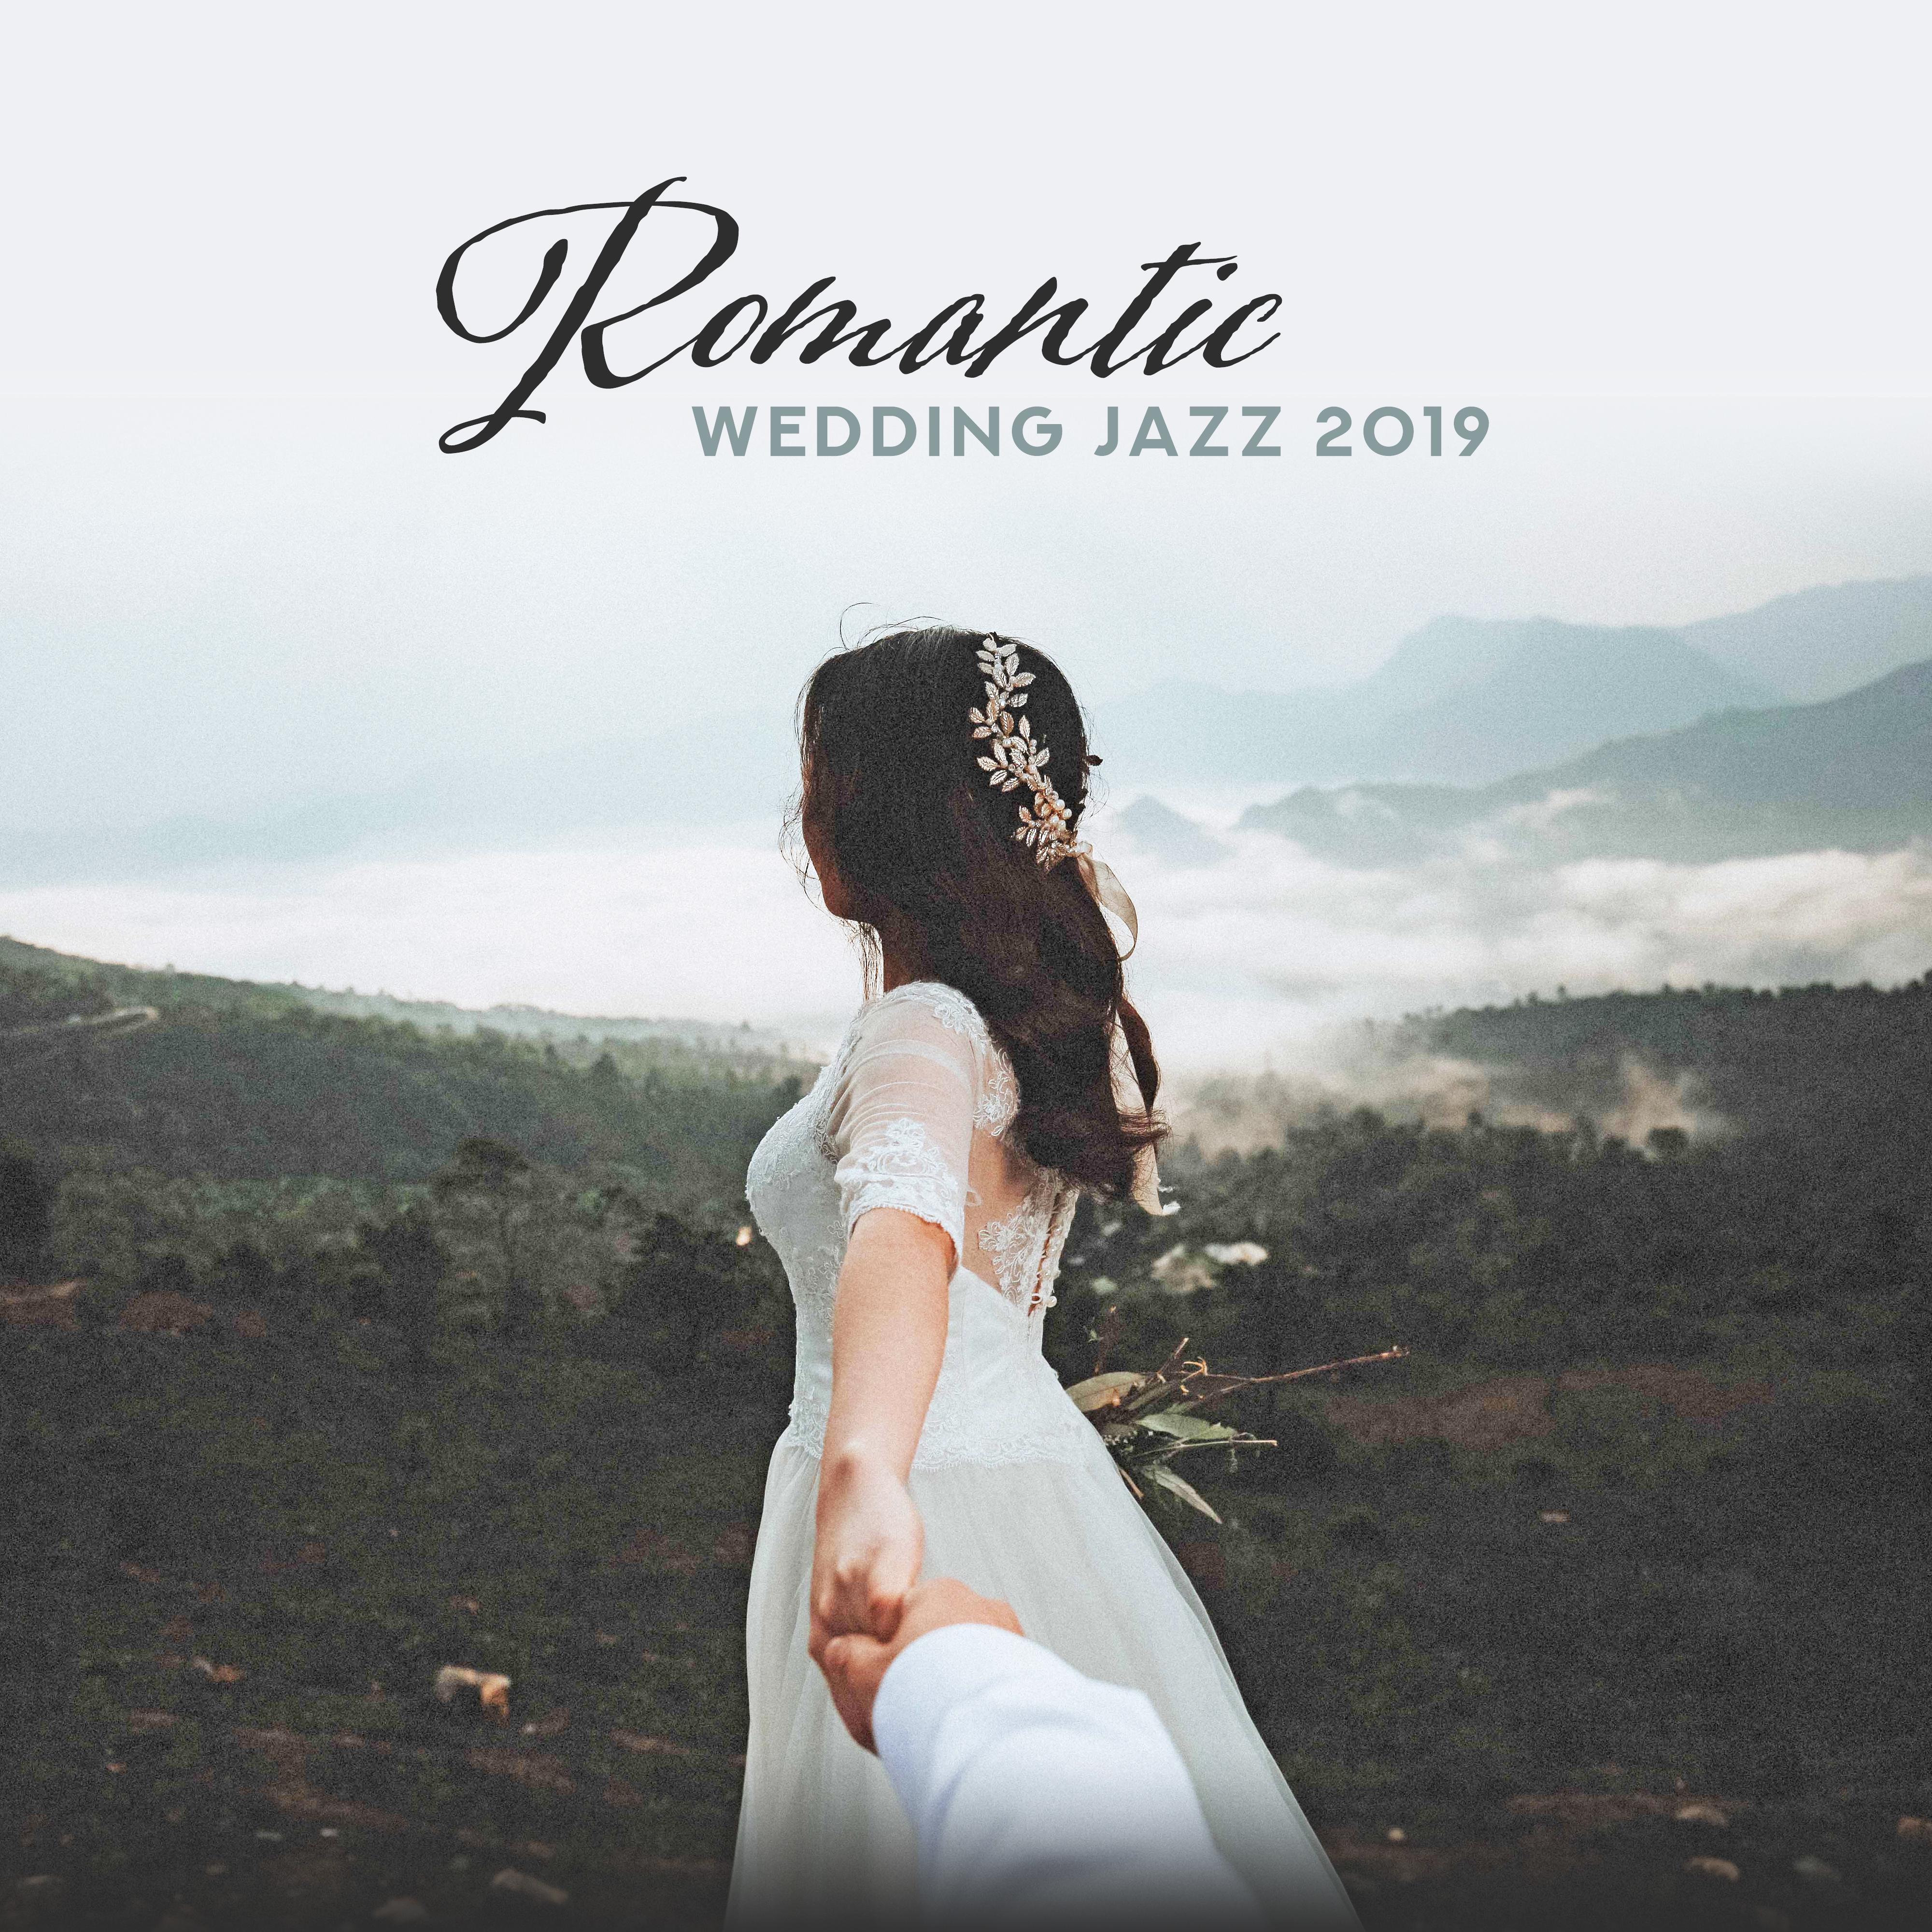 Romantic Wedding Jazz 2019  Instrumental Music for Lovers, Smooth Music for Wedding Day, Beautiful Jazz